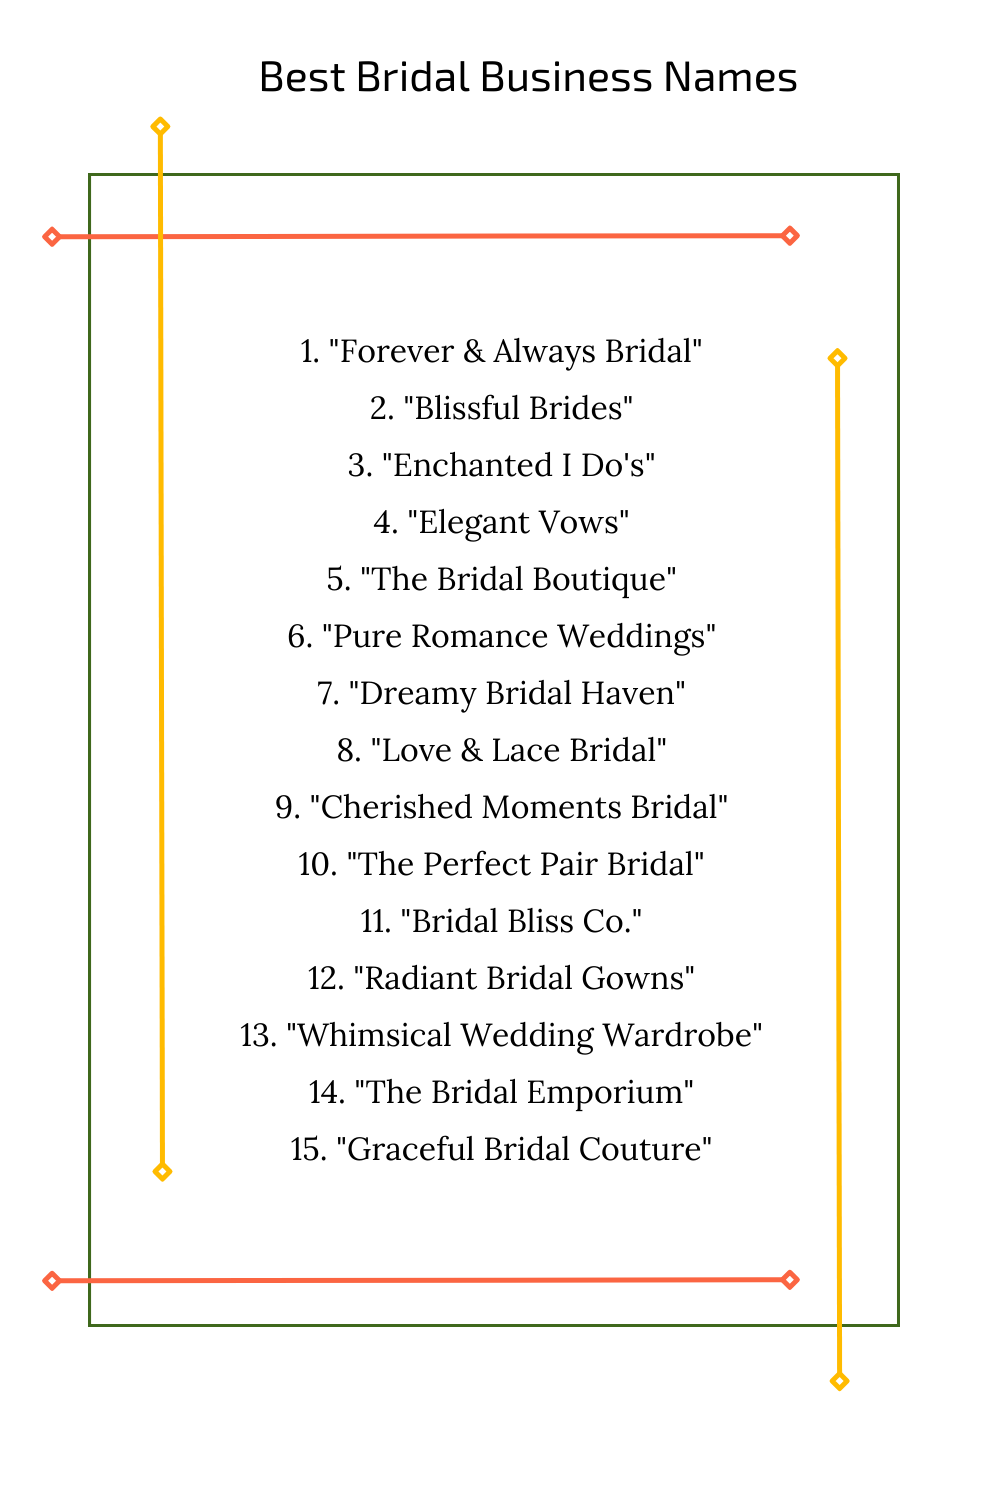 Best Bridal Business Names